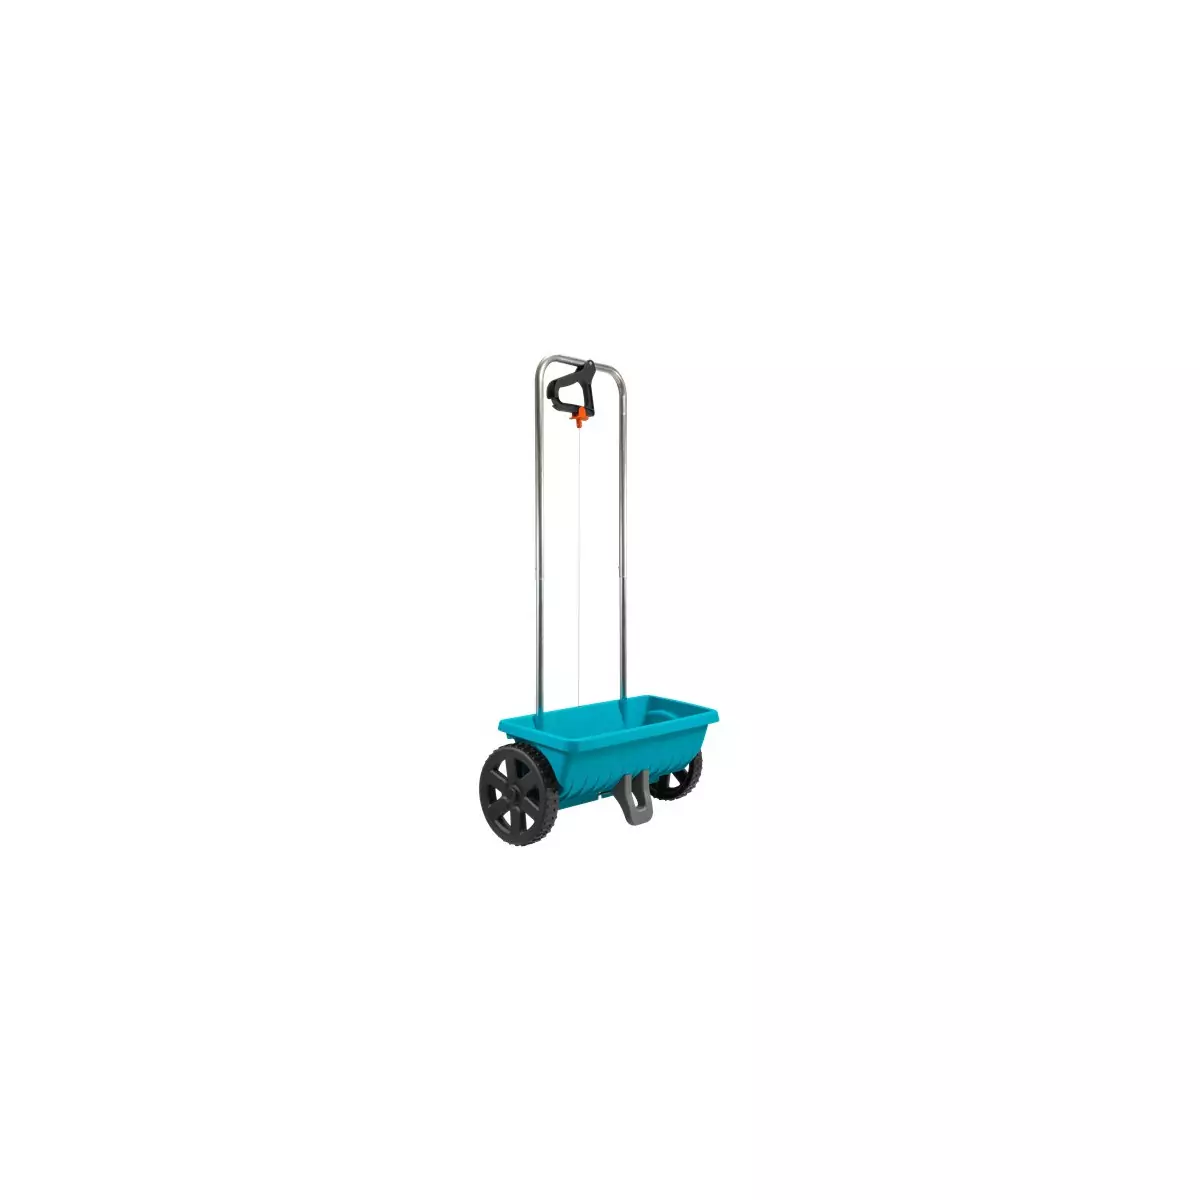 Fertilizer spreader or lawn L on wheels Gardena